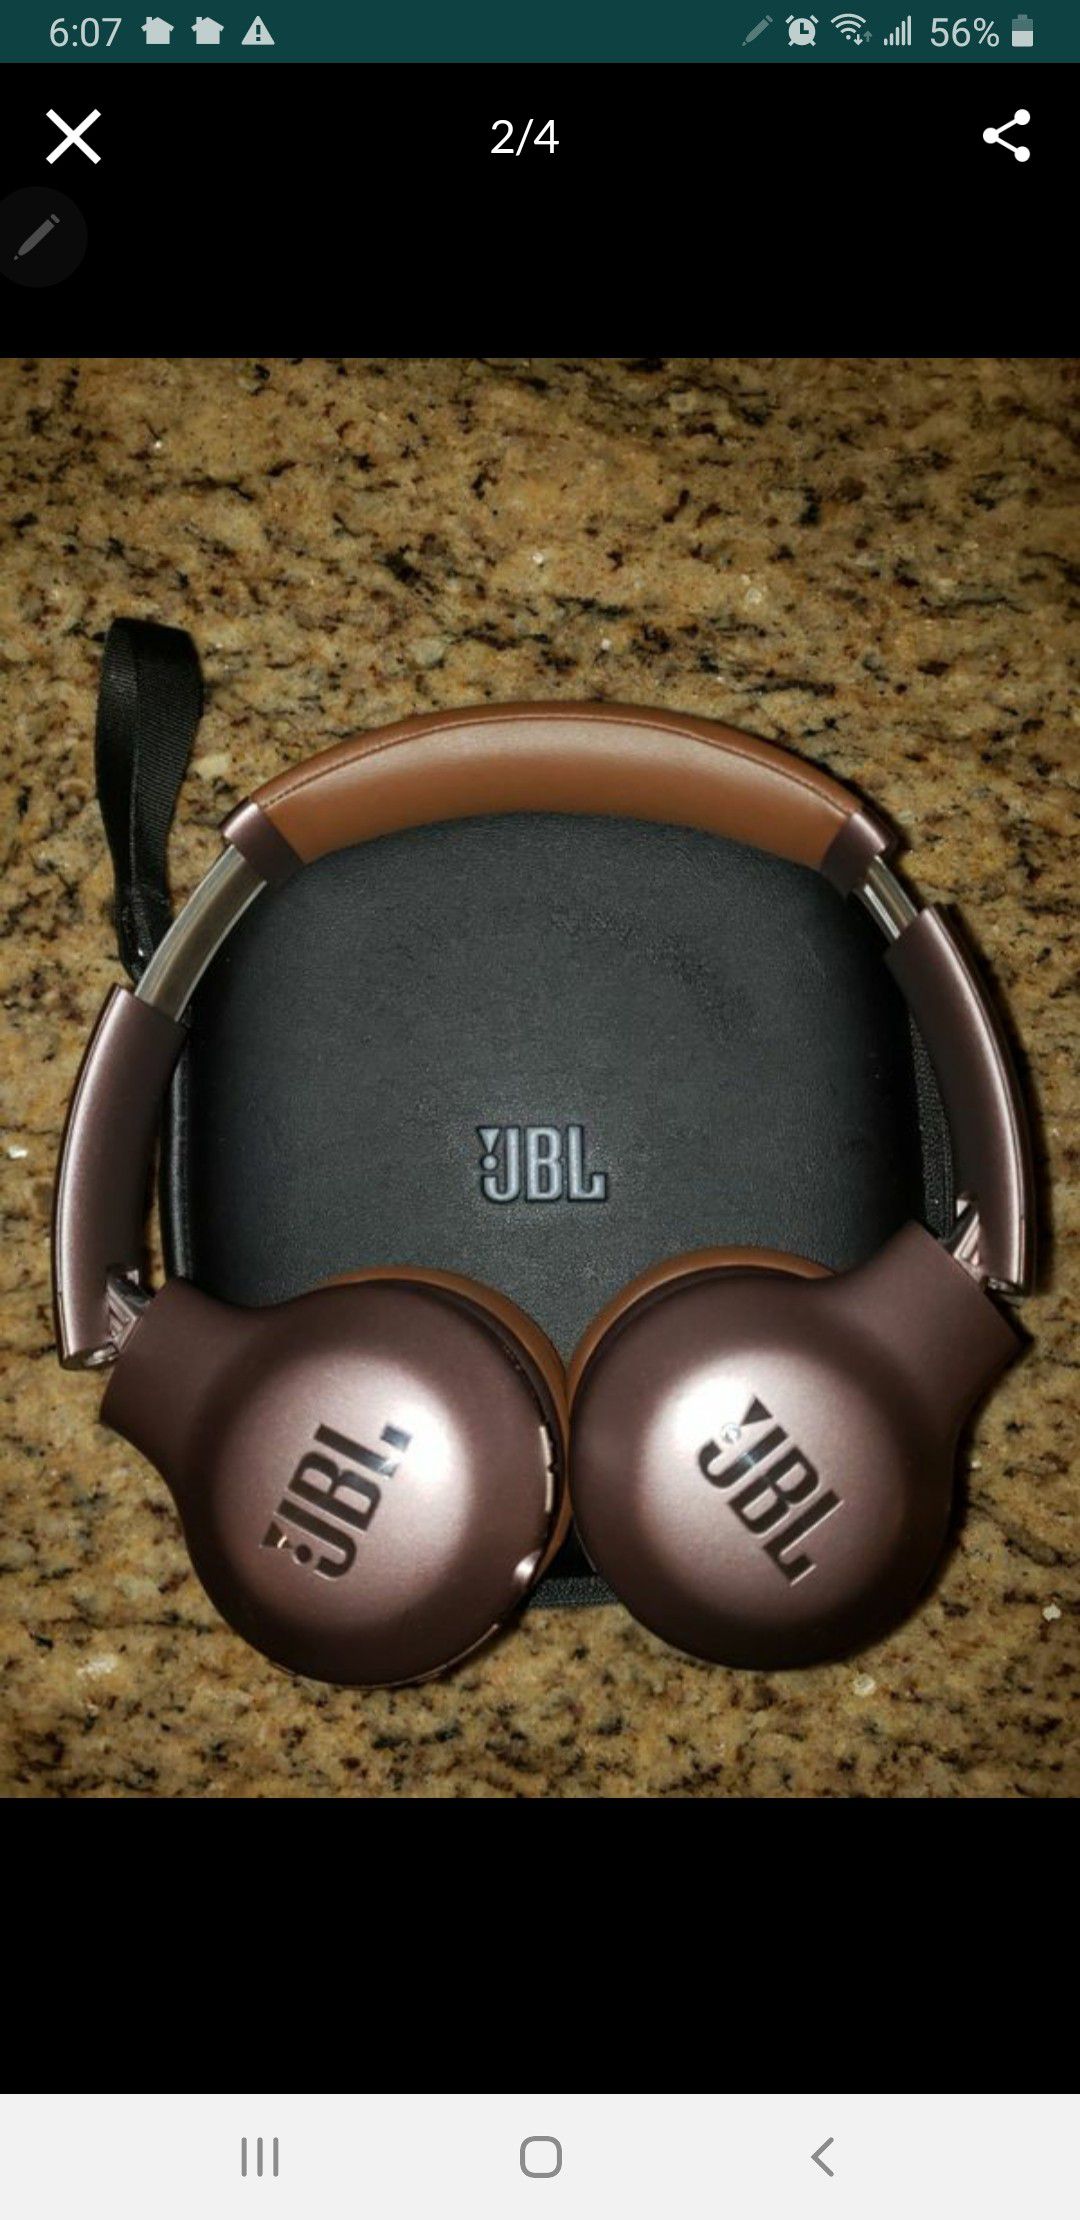 JBL Everest "310 Wireless Headphones